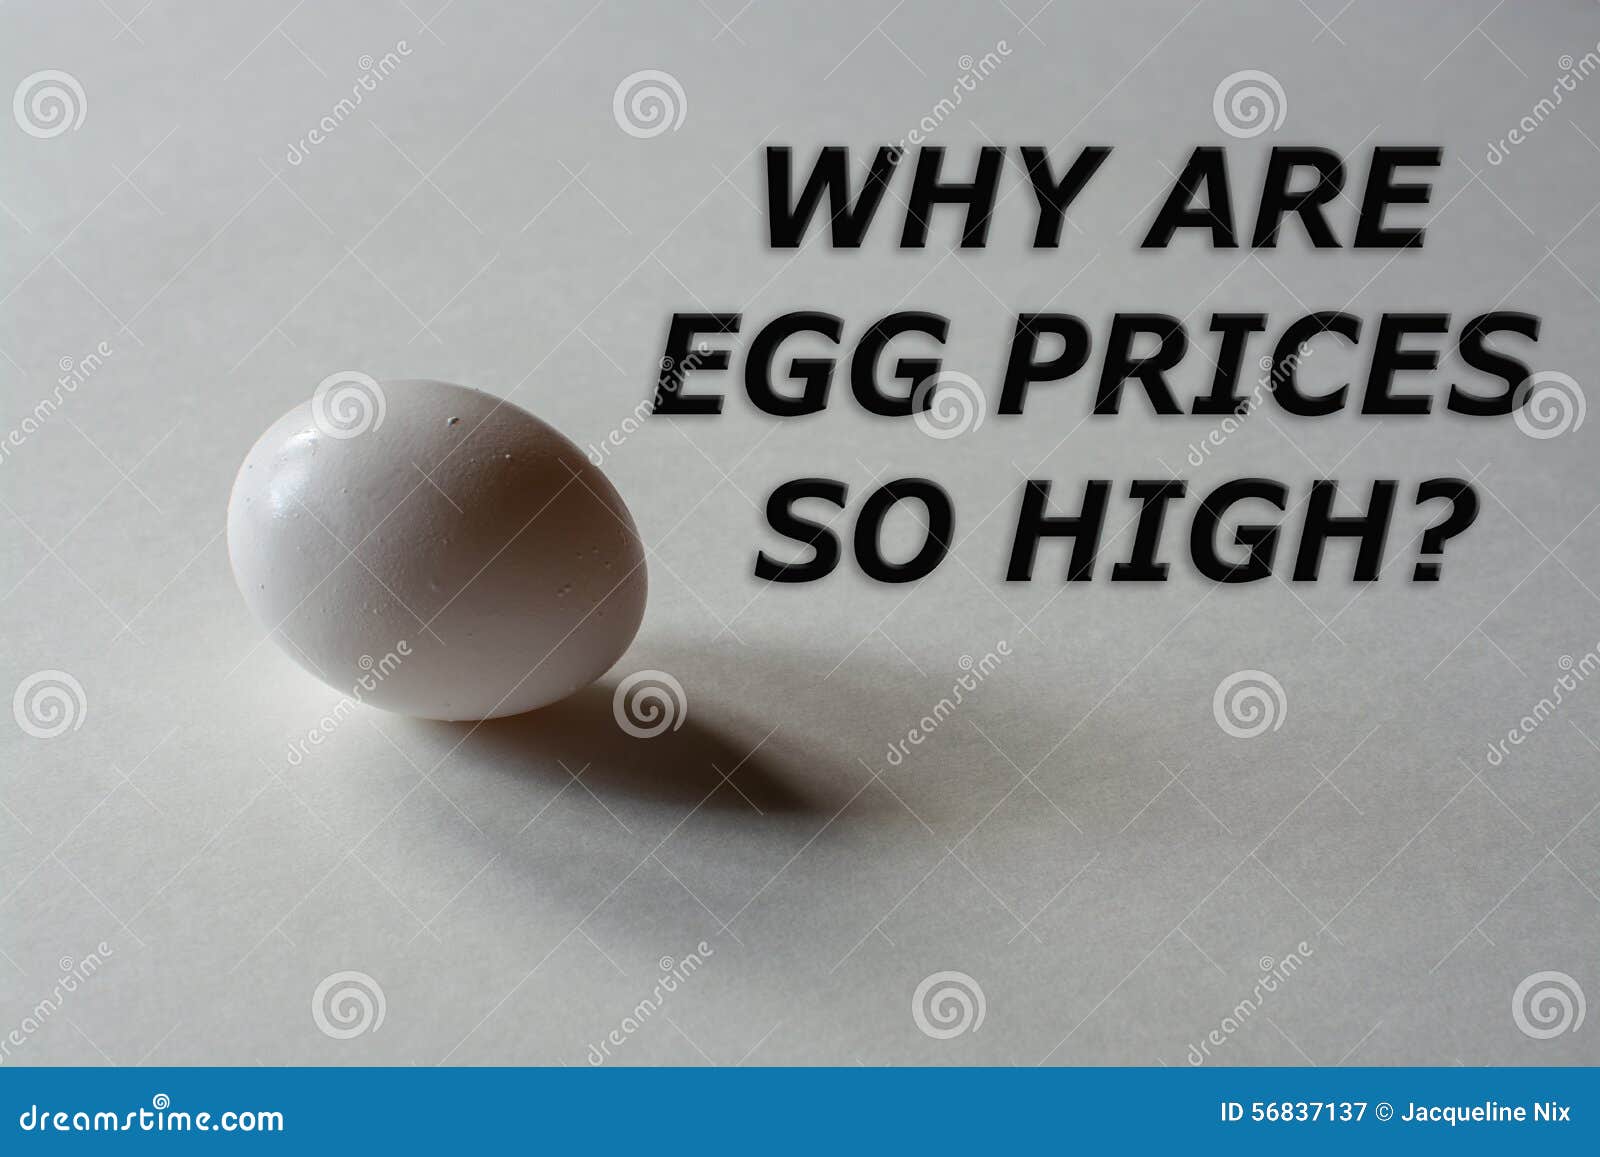 Мужские яйца цена сколько. Цена на яйца за последние 10 лет. Когда нормализуется цена на яйца. Цена яйцо Керама на ножке Господь изображен.